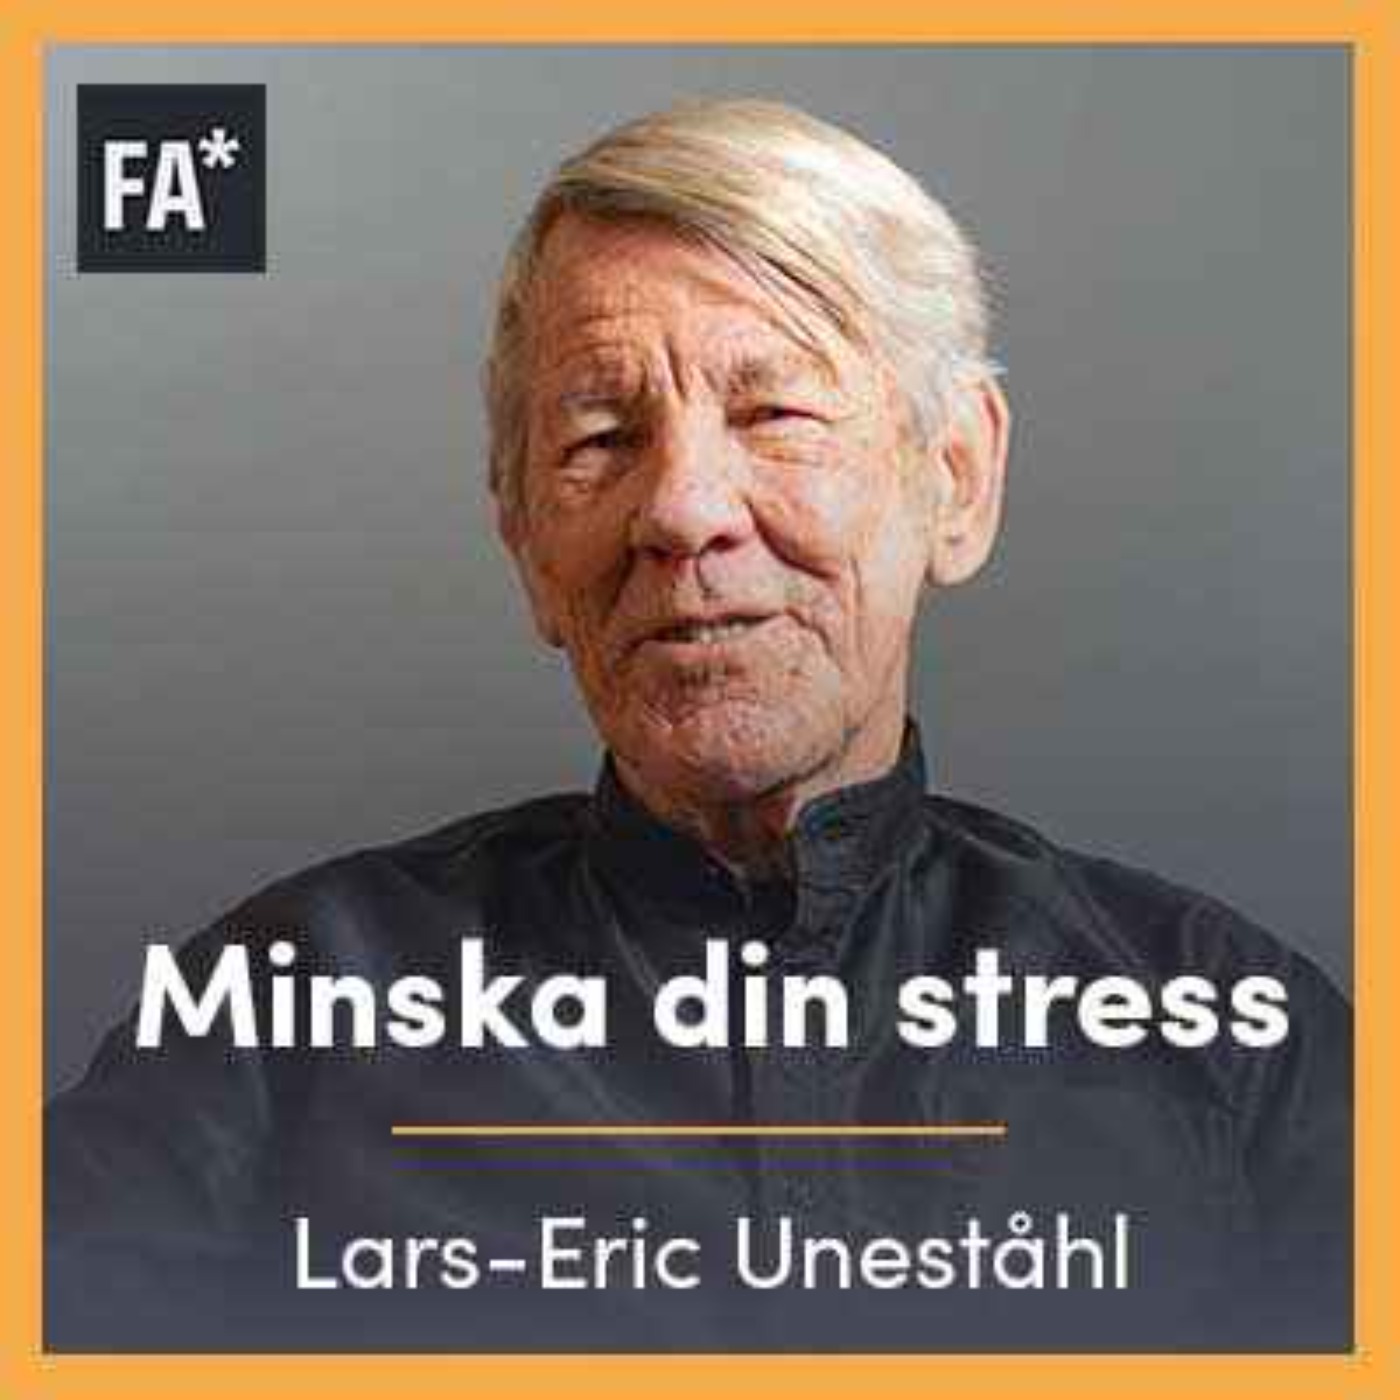 Minska din stress - Lars-Eric Uneståhl